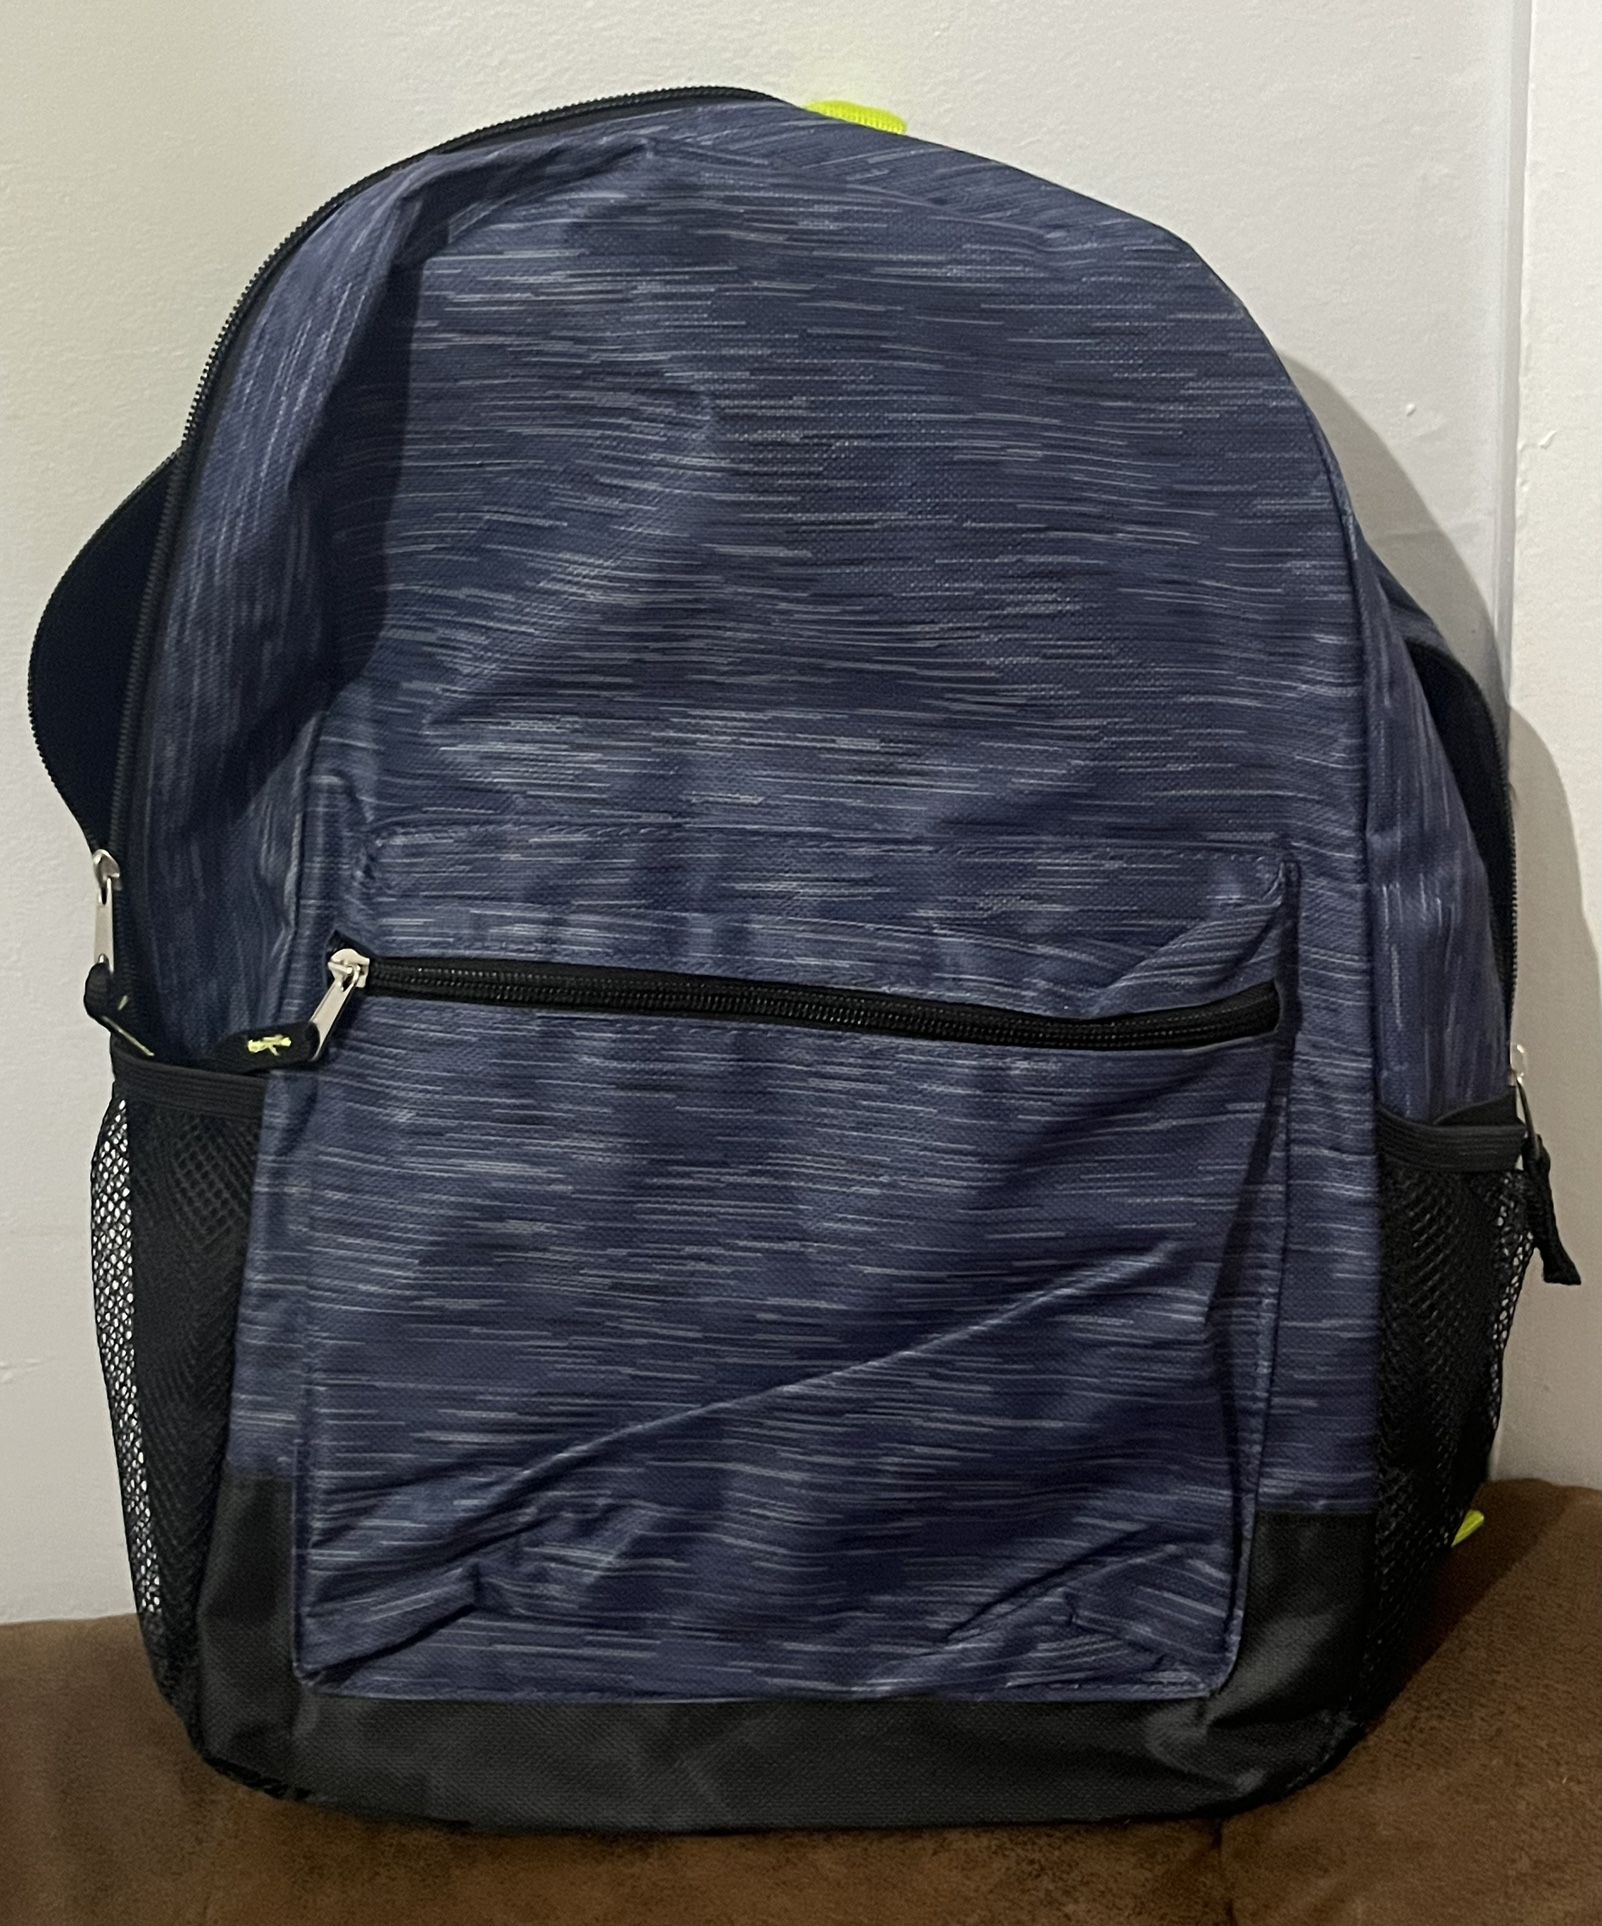 Madison & Dakota 17" backpack denium & green new but no tags 